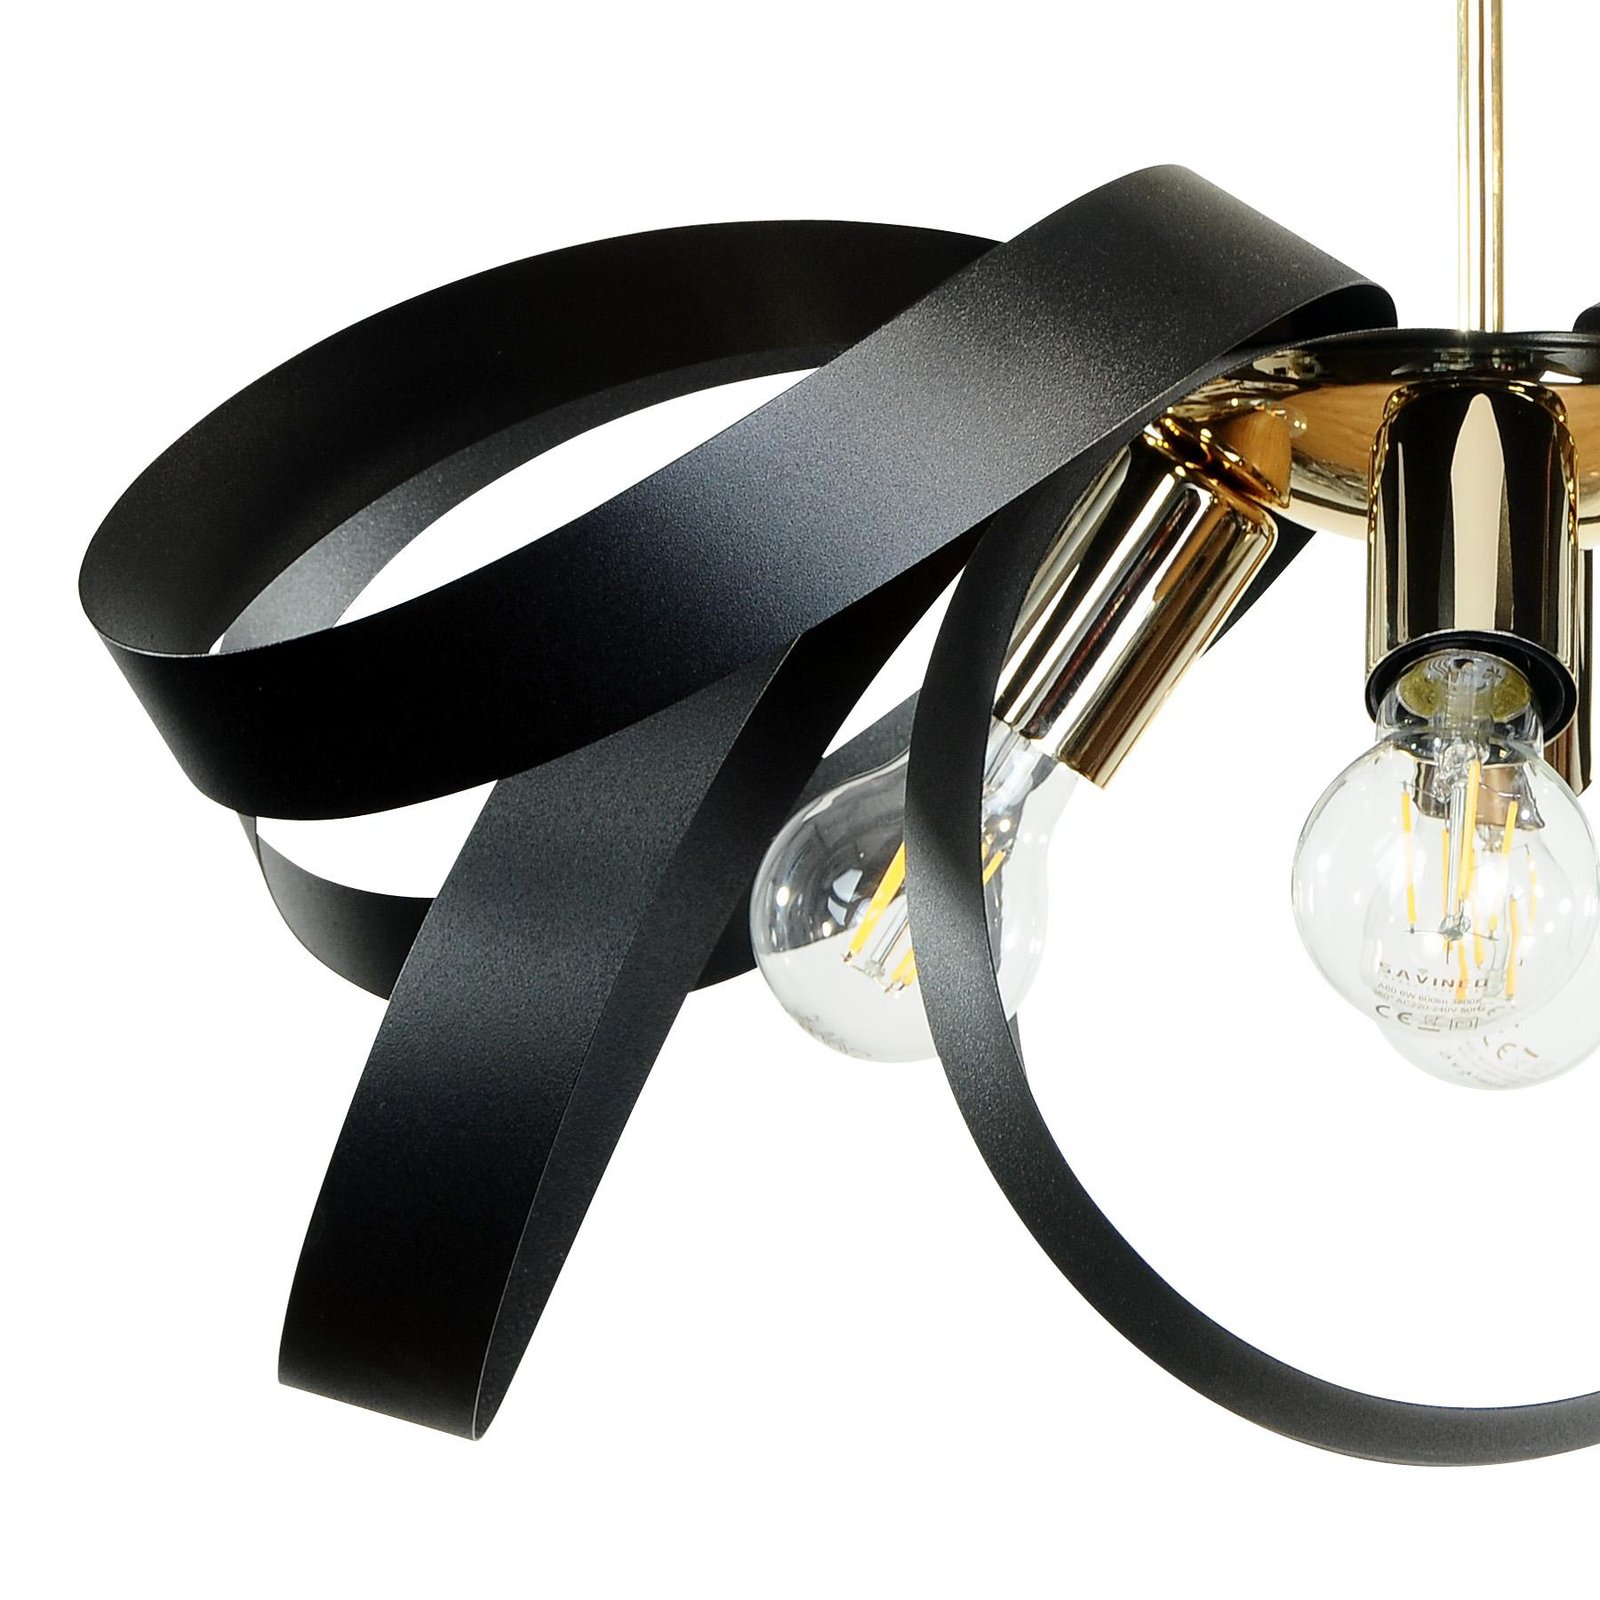 Euluna Petla plafondlamp, zwart/goud, metaal, Ø 65 cm